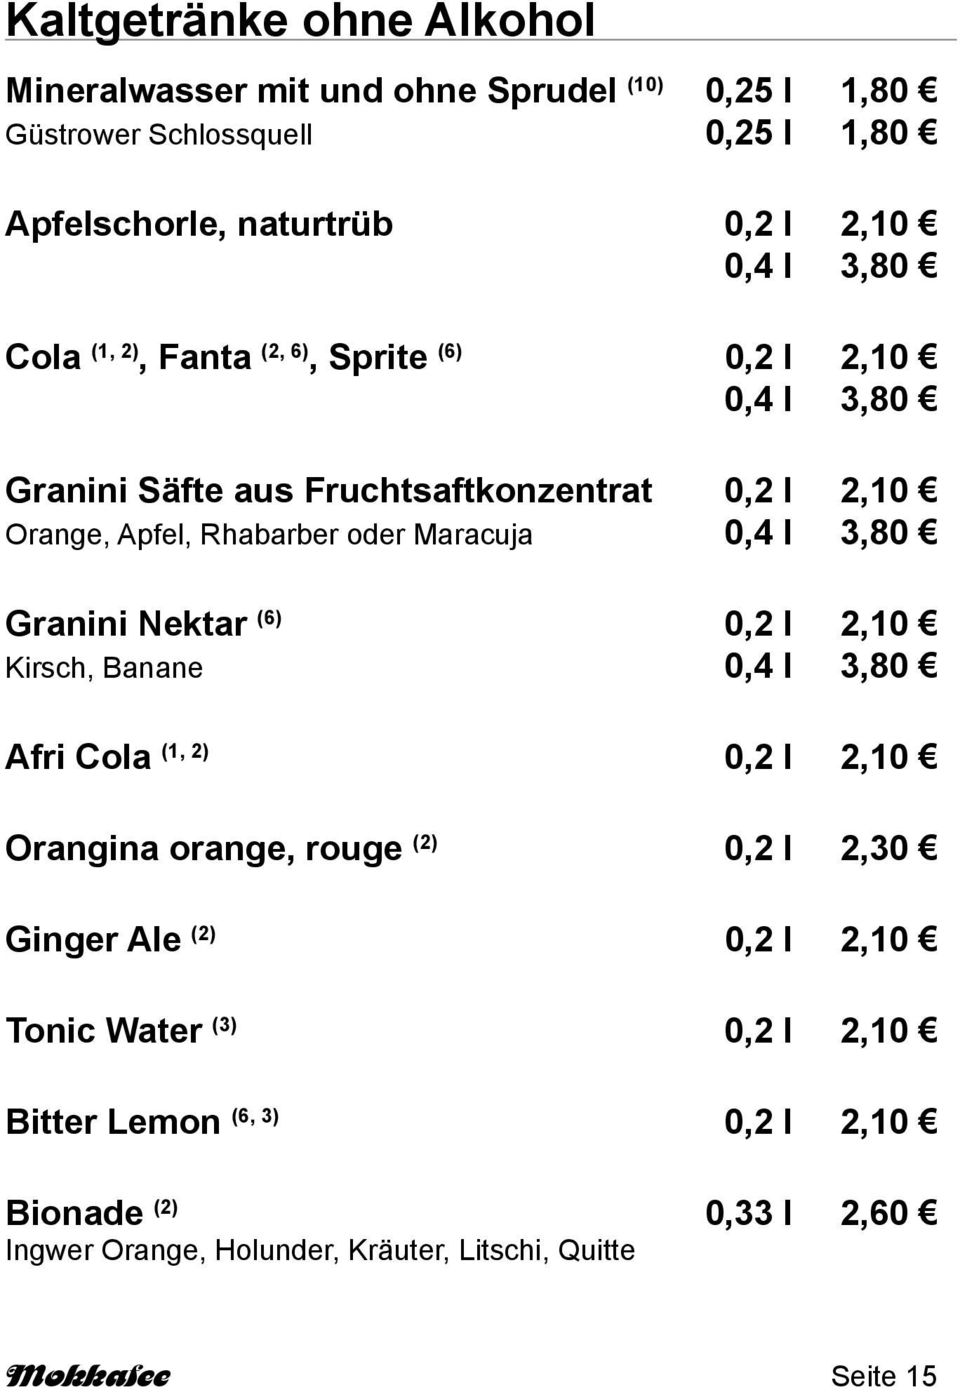 0,4 l 3,80 Granini Nektar (6) 0,2 l 2,10 Kirsch, Banane 0,4 l 3,80 Afri Cola (1, 2) 0,2 l 2,10 Orangina orange, rouge (2) 0,2 l 2,30 Ginger Ale (2) 0,2 l